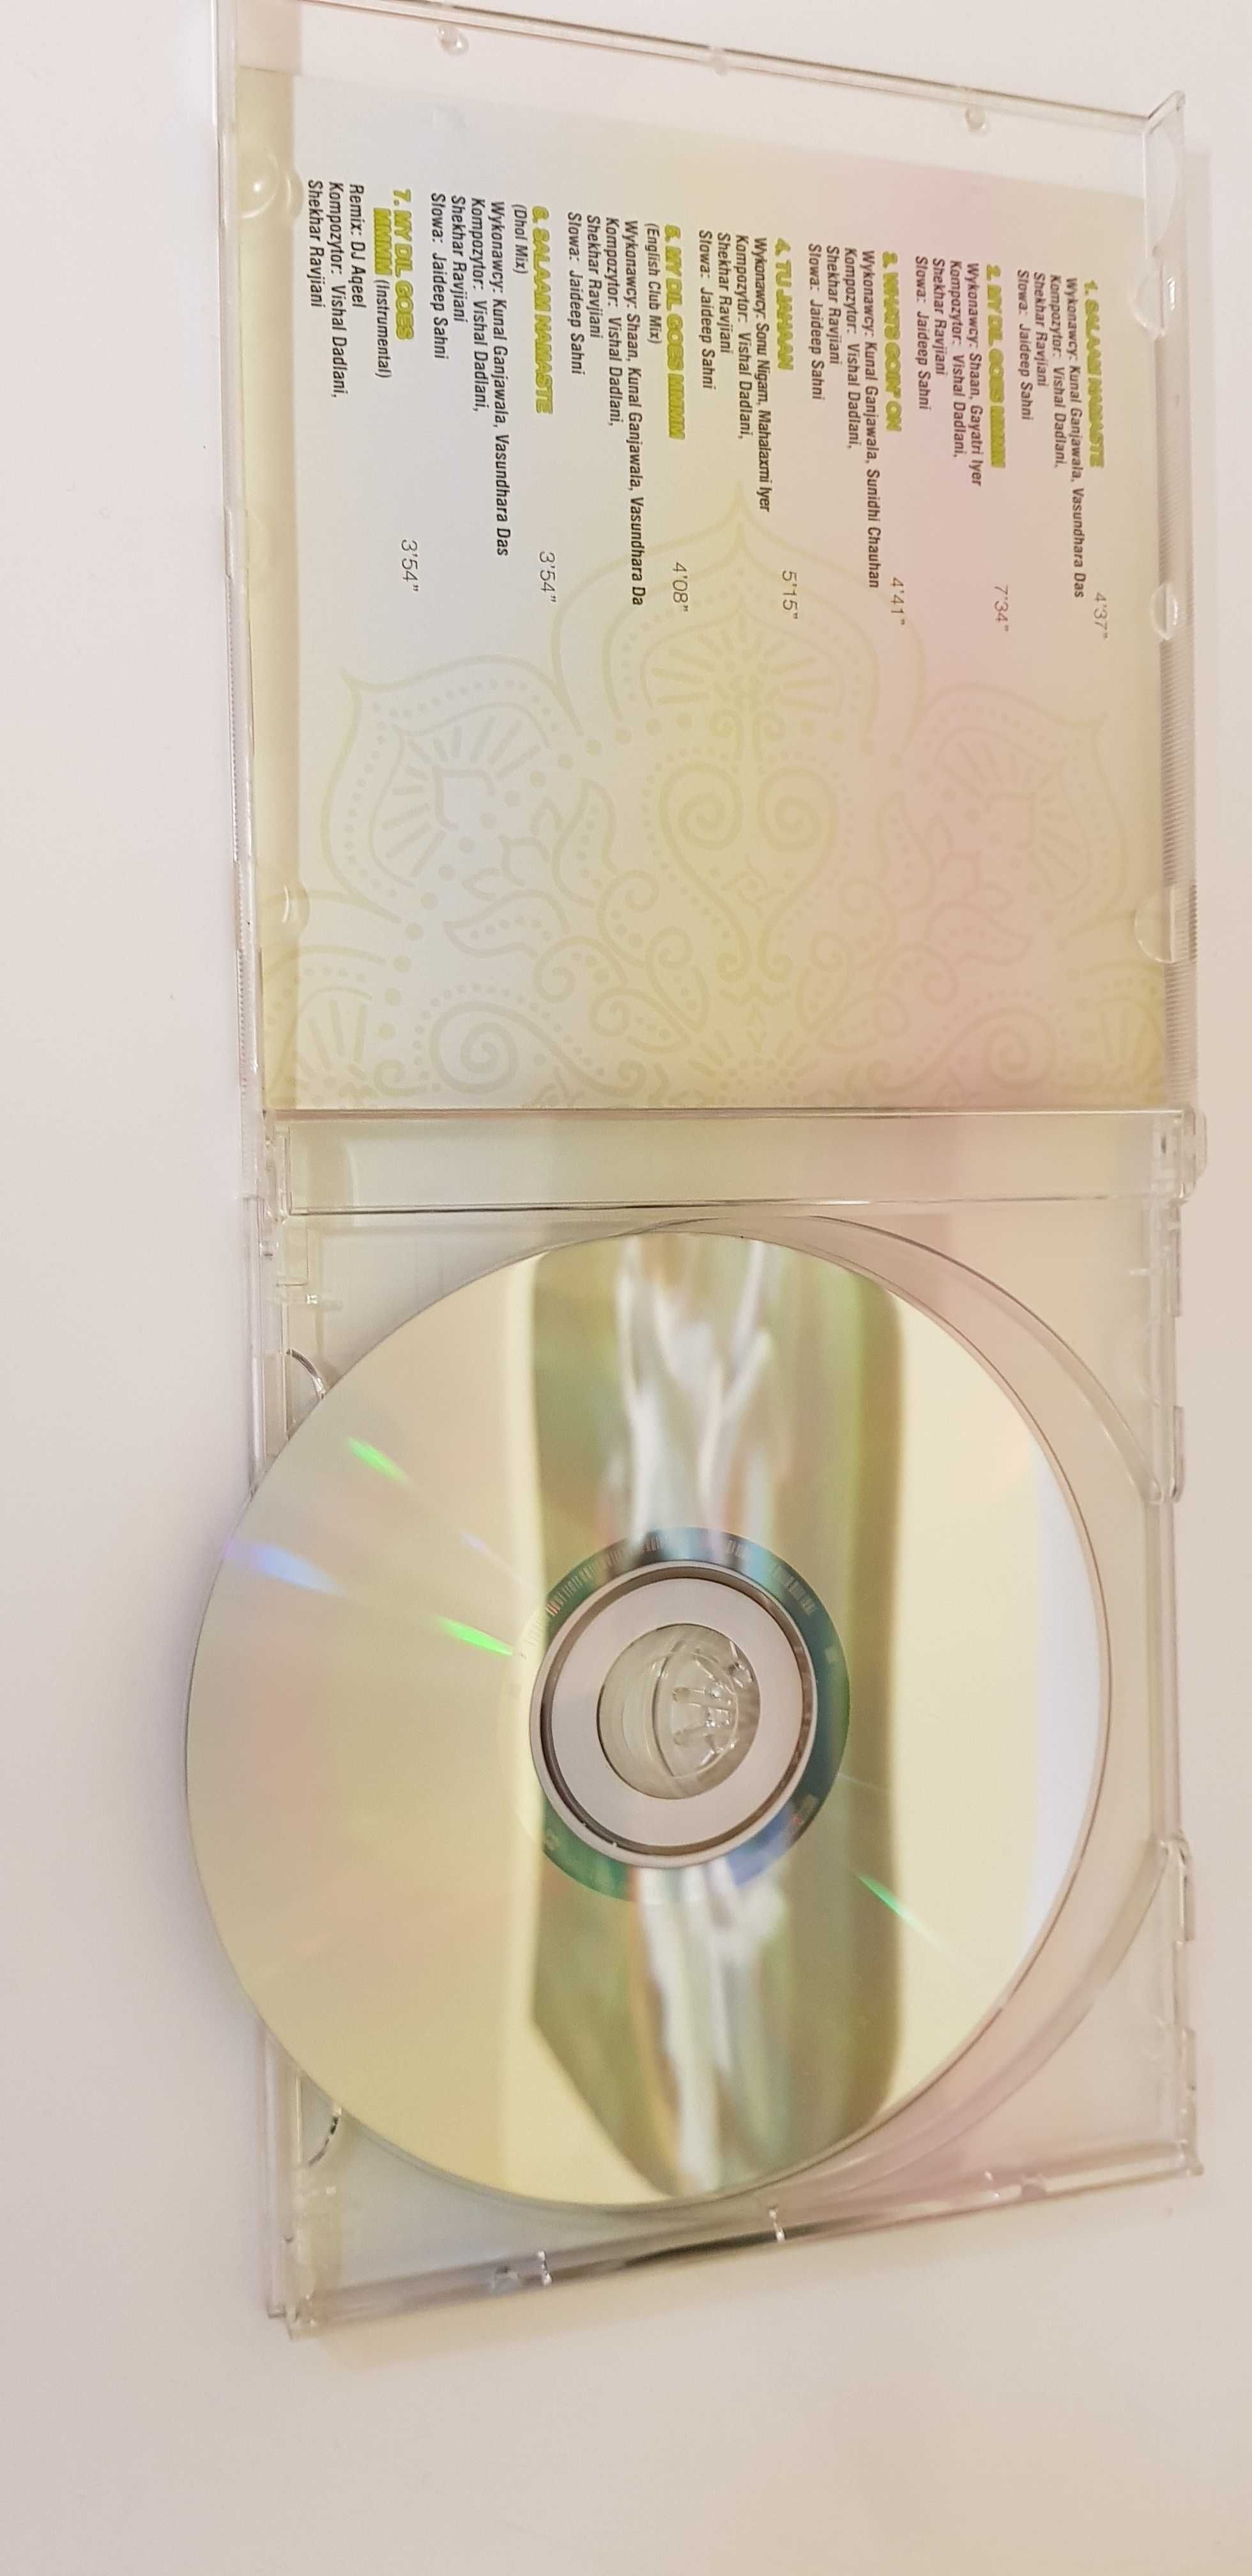 Salaam namaste - Trudna droga do miłości CD